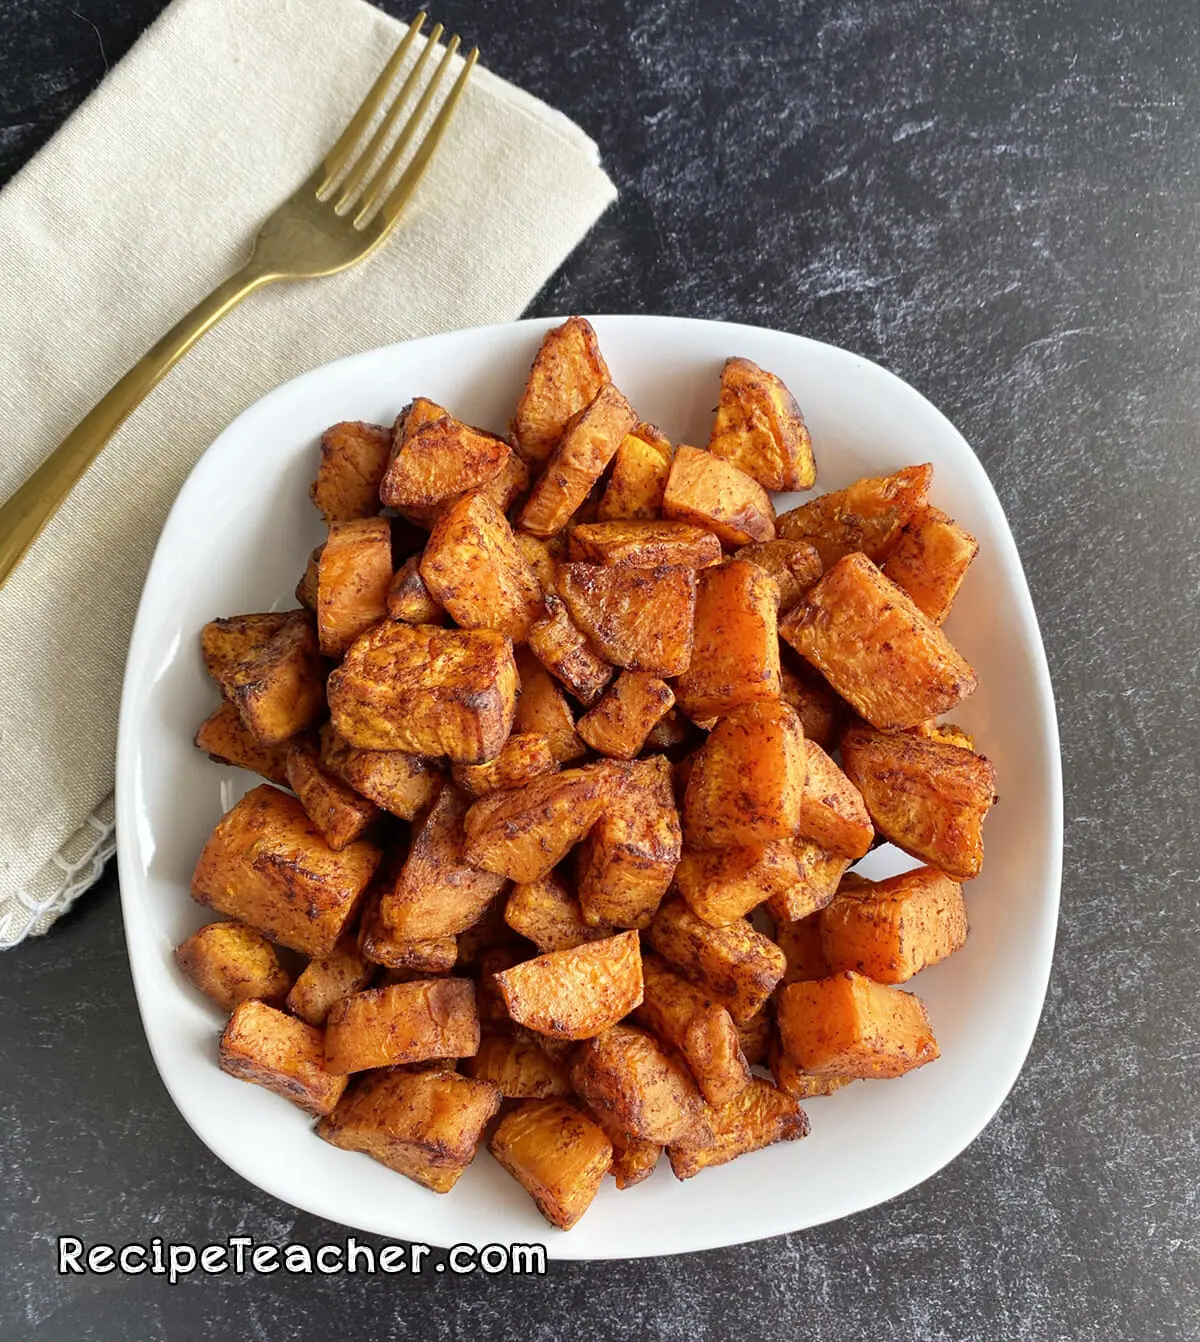 Recipe for air fryer sweet potatoes